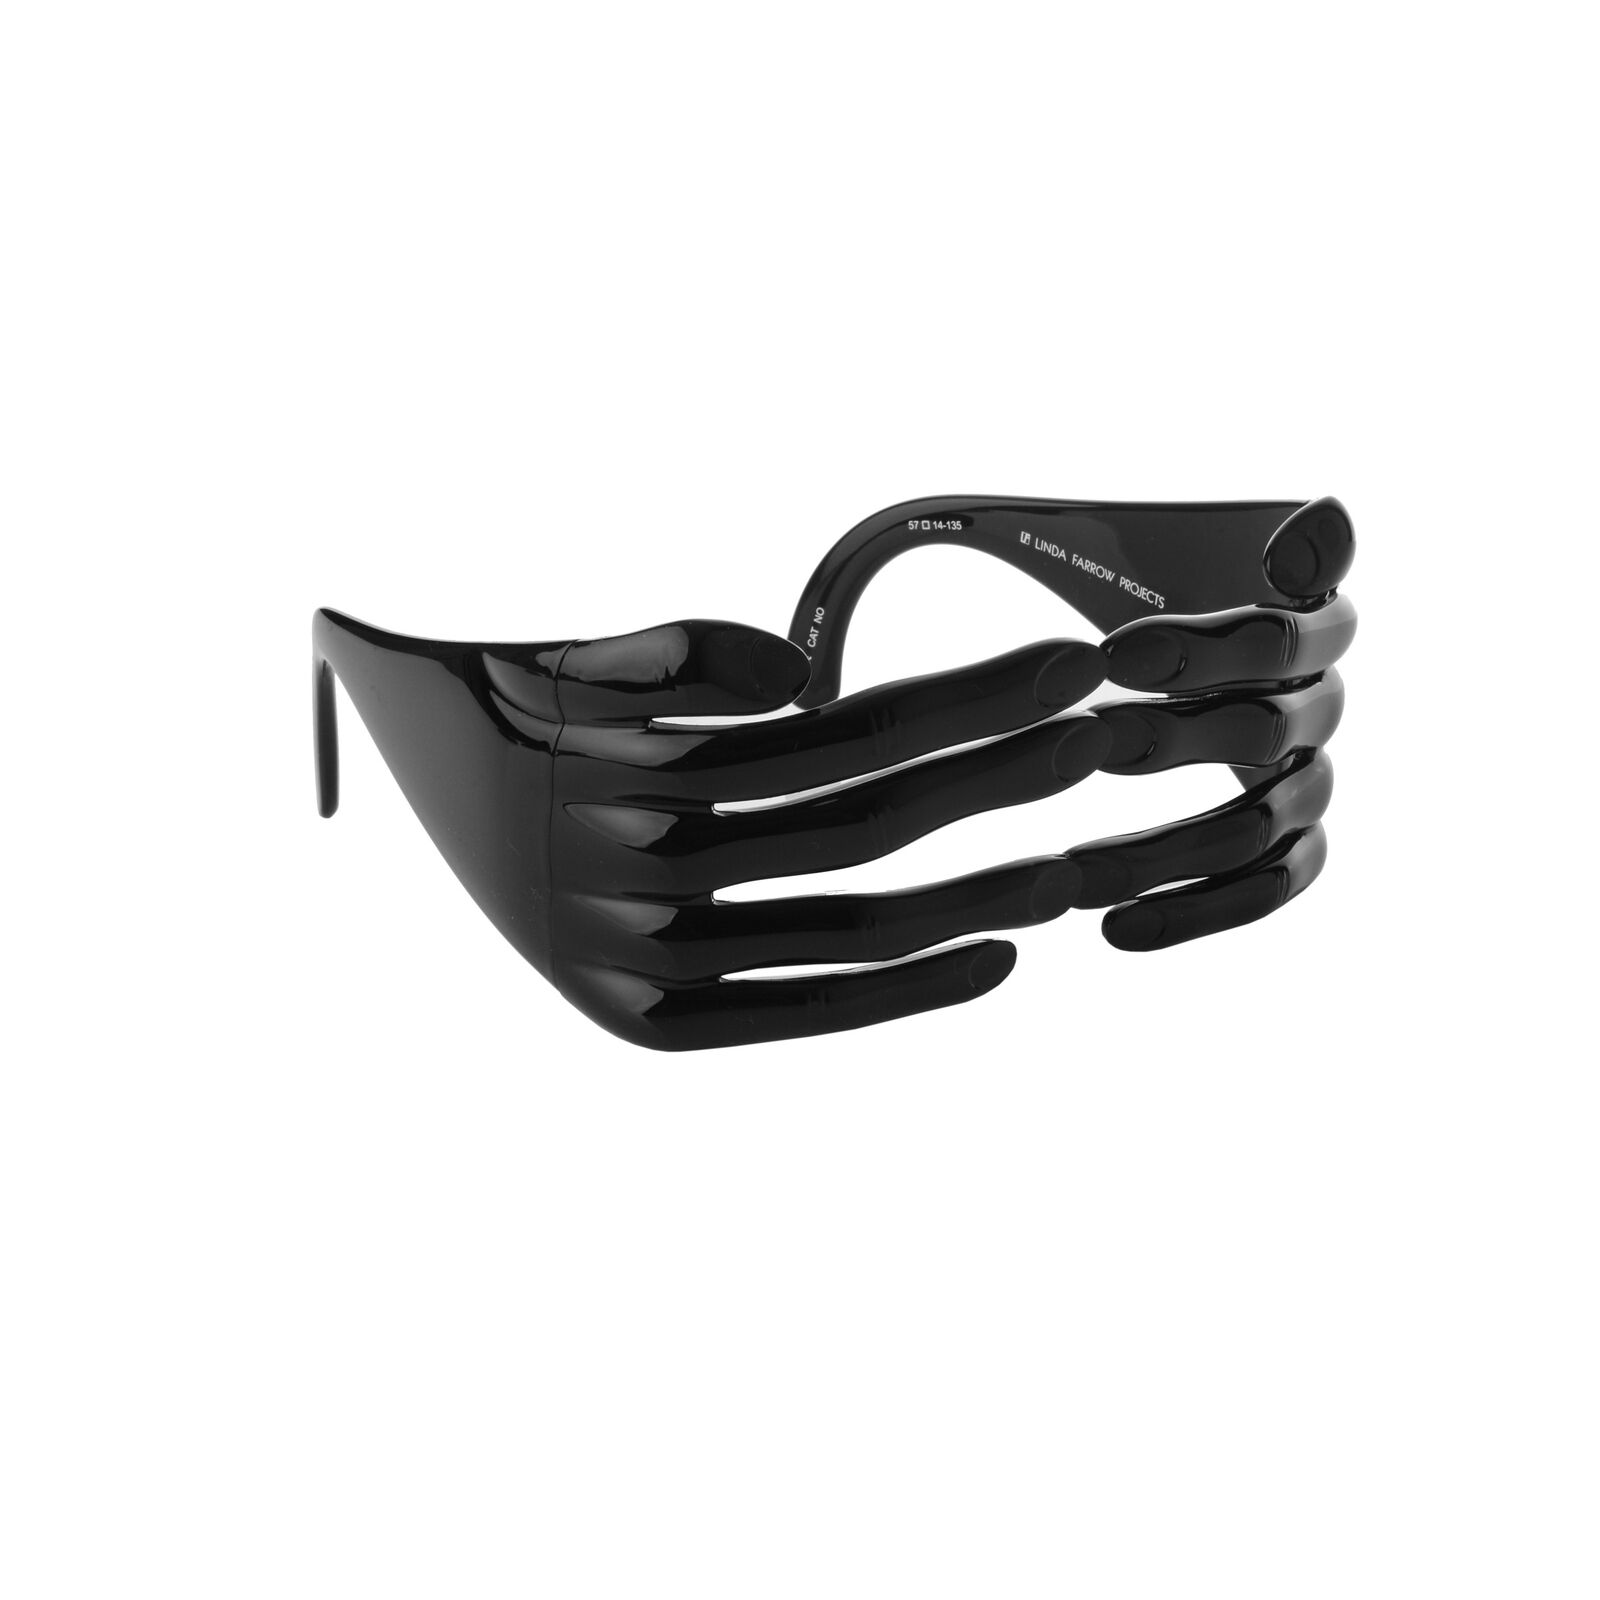 Sunglasses Jeremy Scott SS2011 black acetate hands frame ORIGINAL NEW